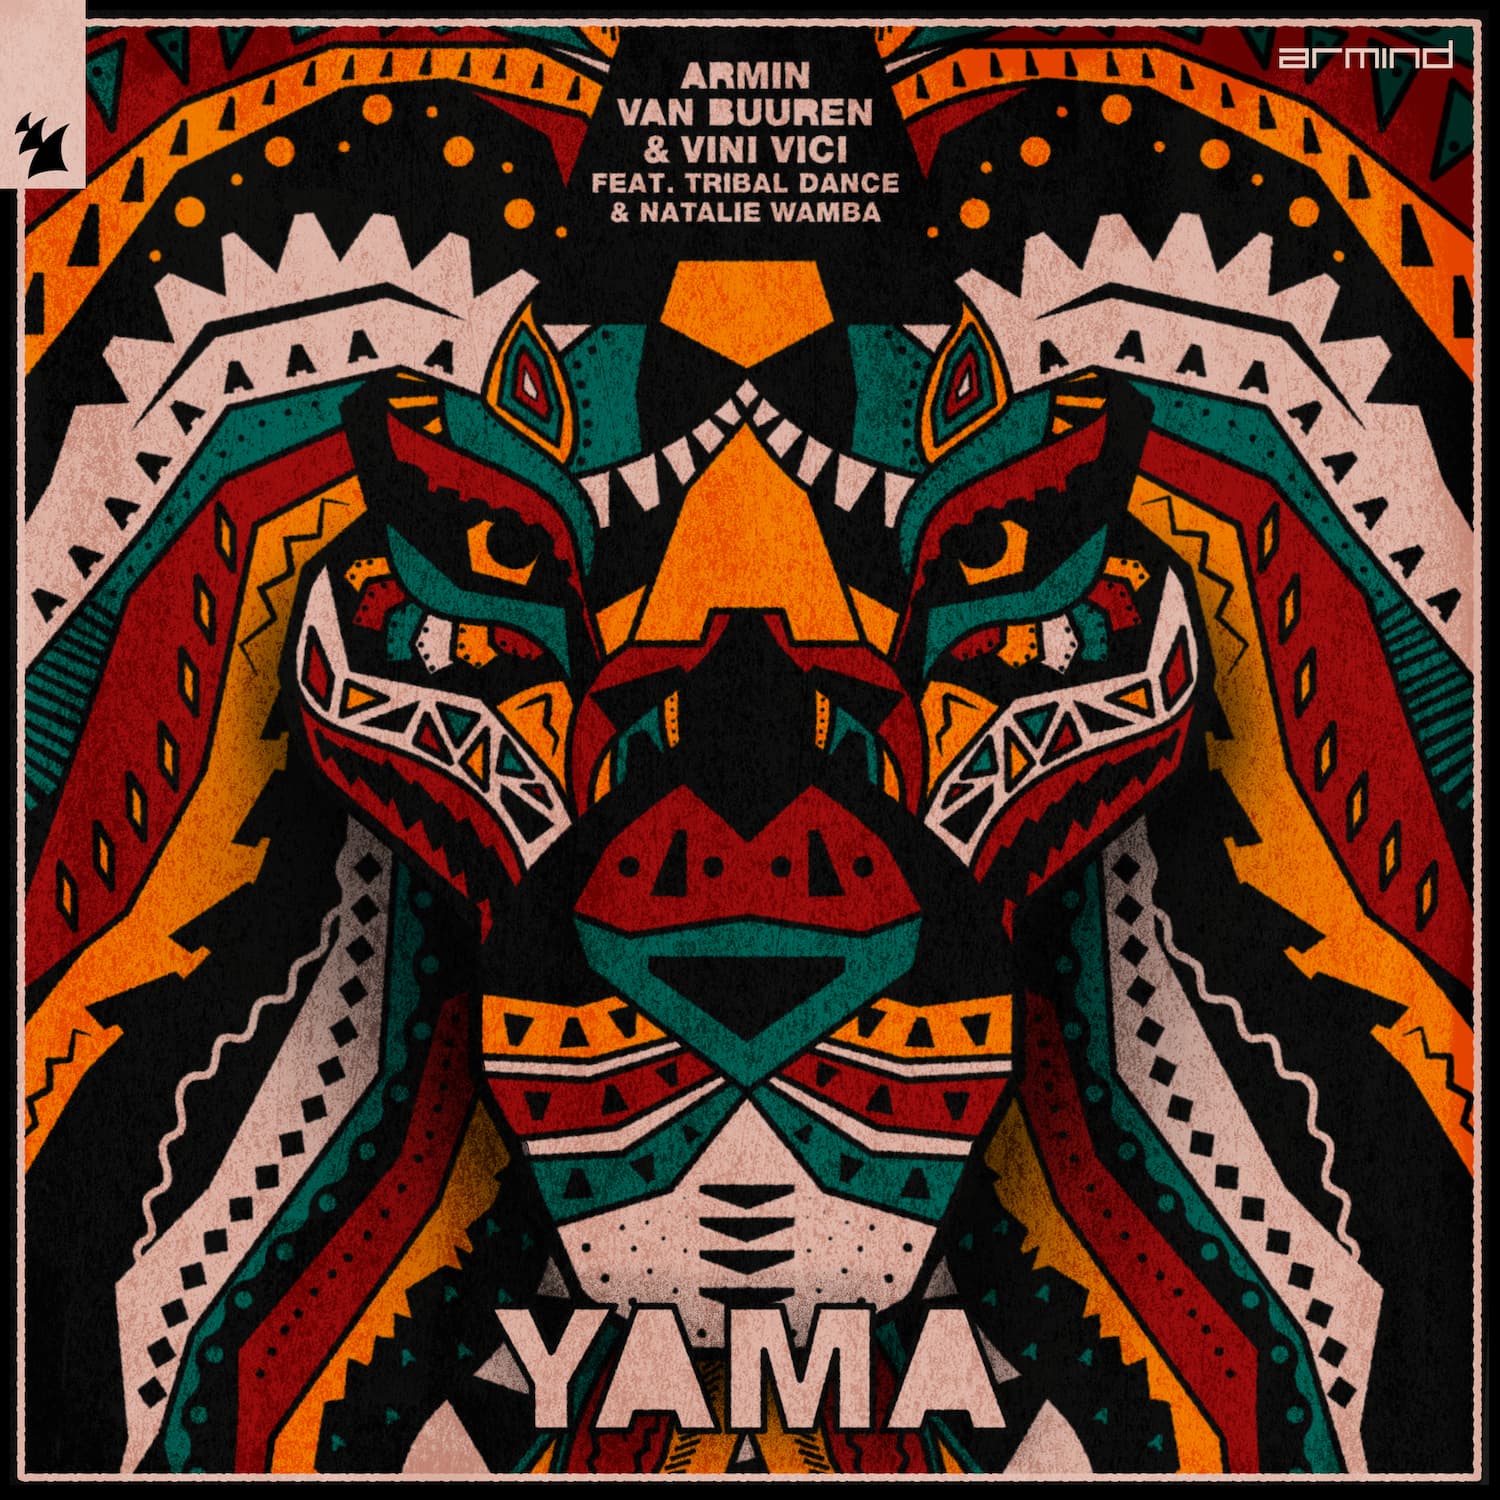 Armin Van Buuren e Vini Vici lançam terceira collab, "Yama"